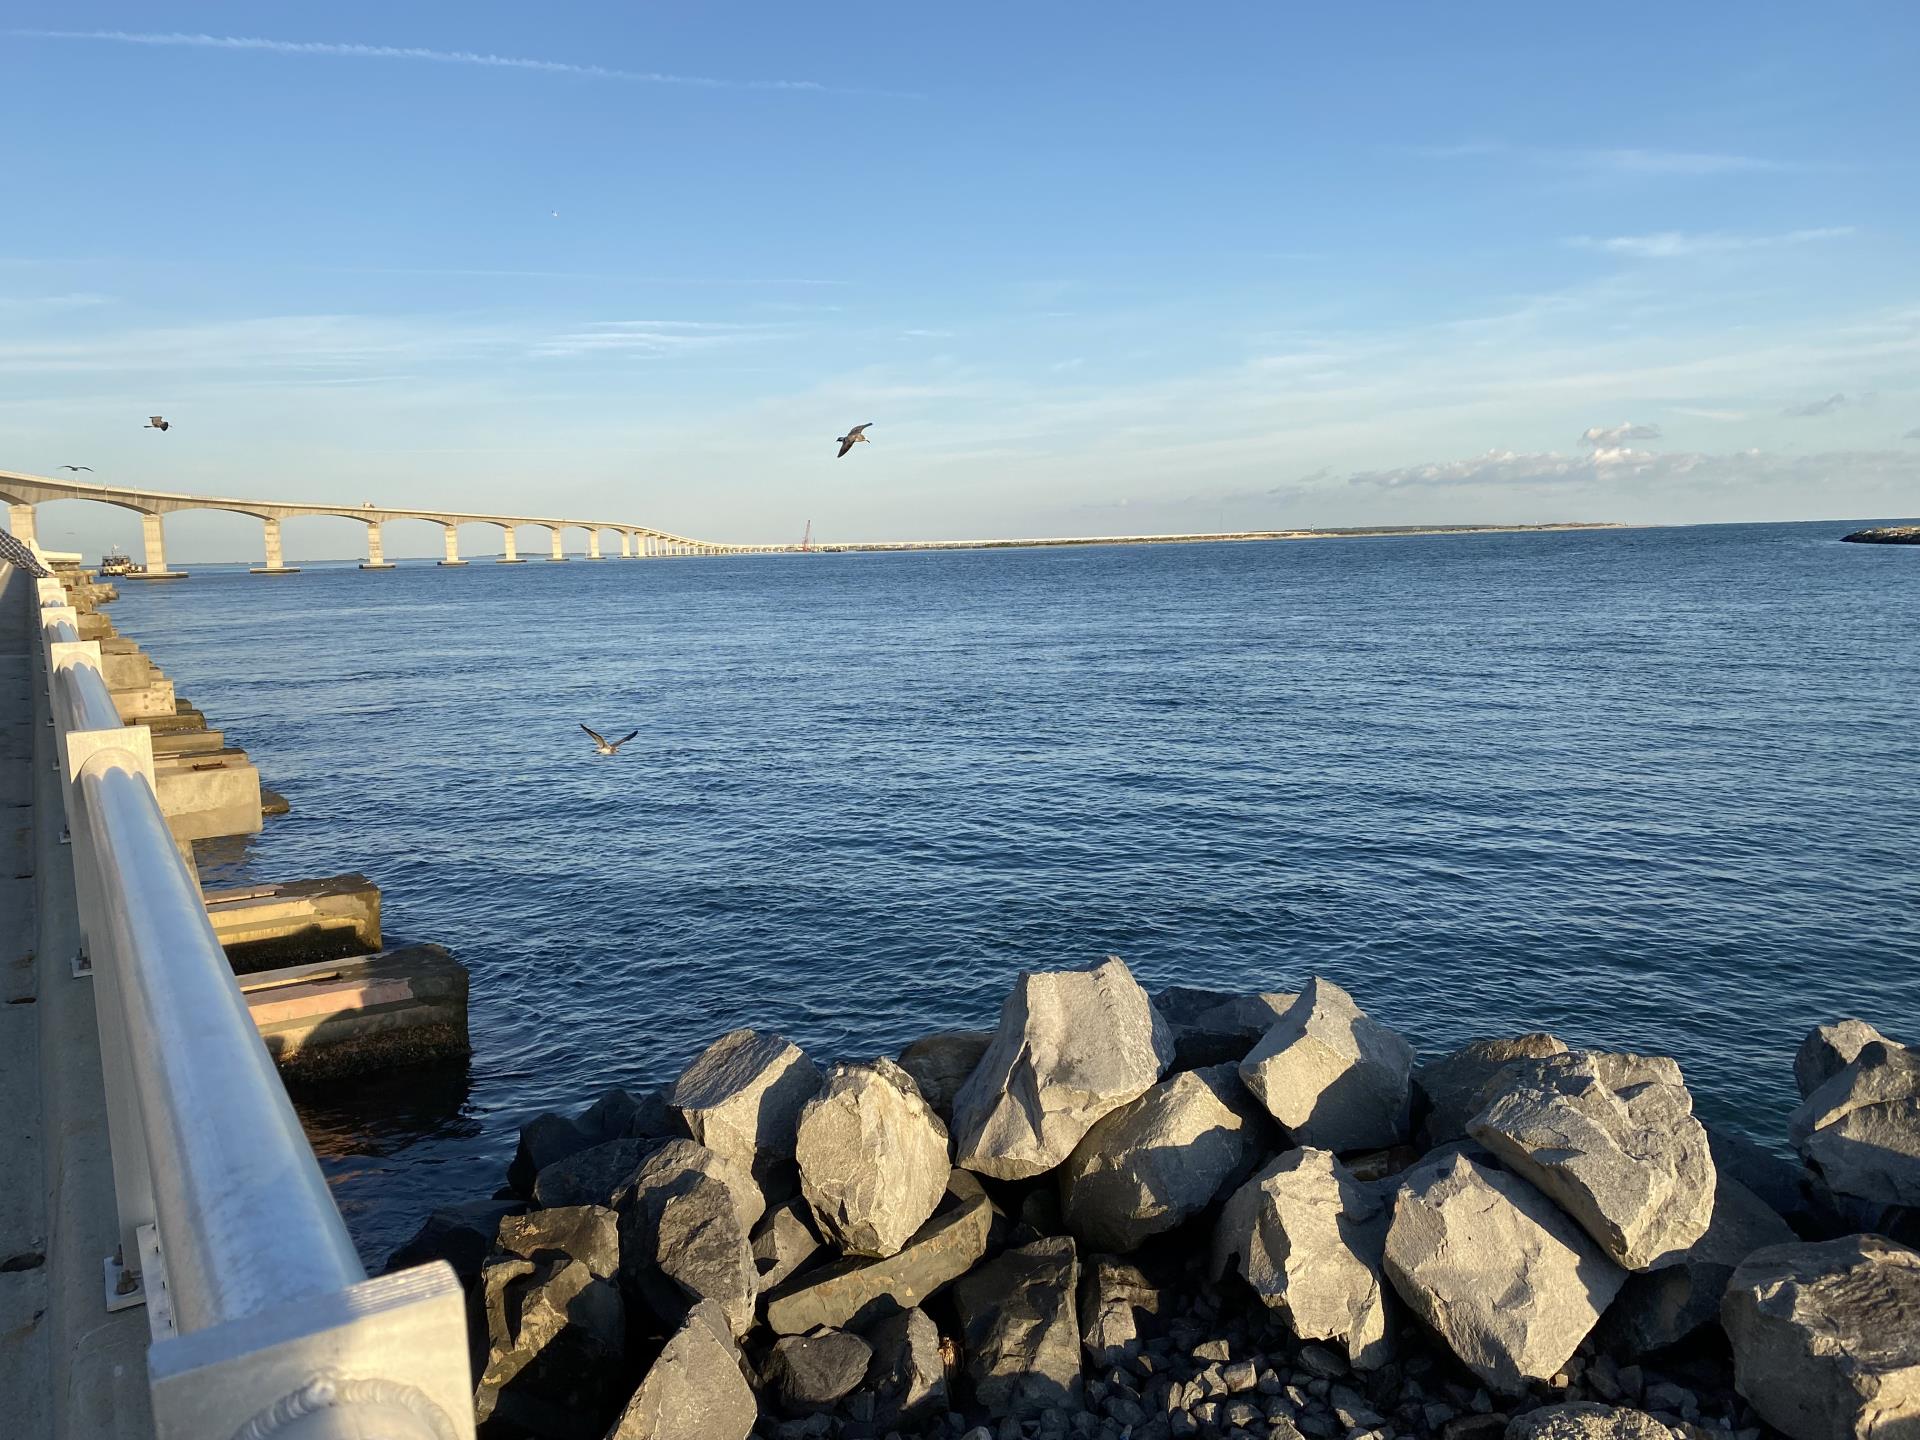 Image of Oregon Inlet with seagulls flying and Marc Basnight Bridge